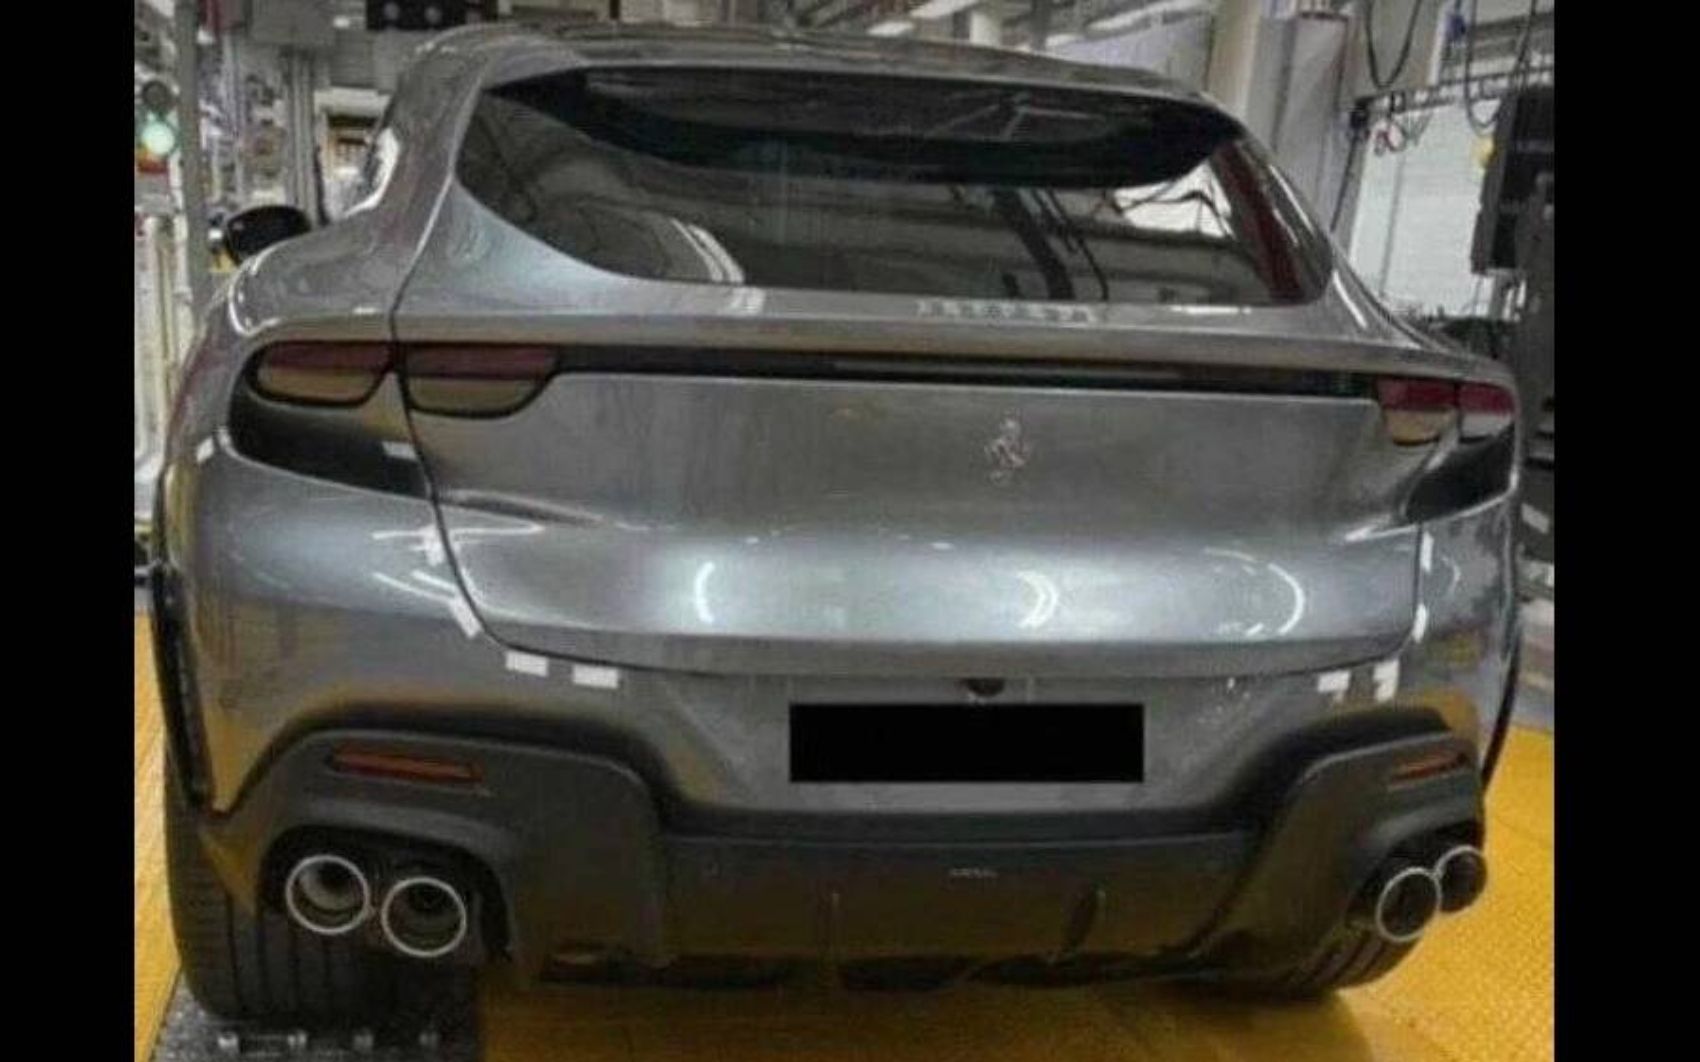 Ferrari Purosangue spied on assembly line - Rear